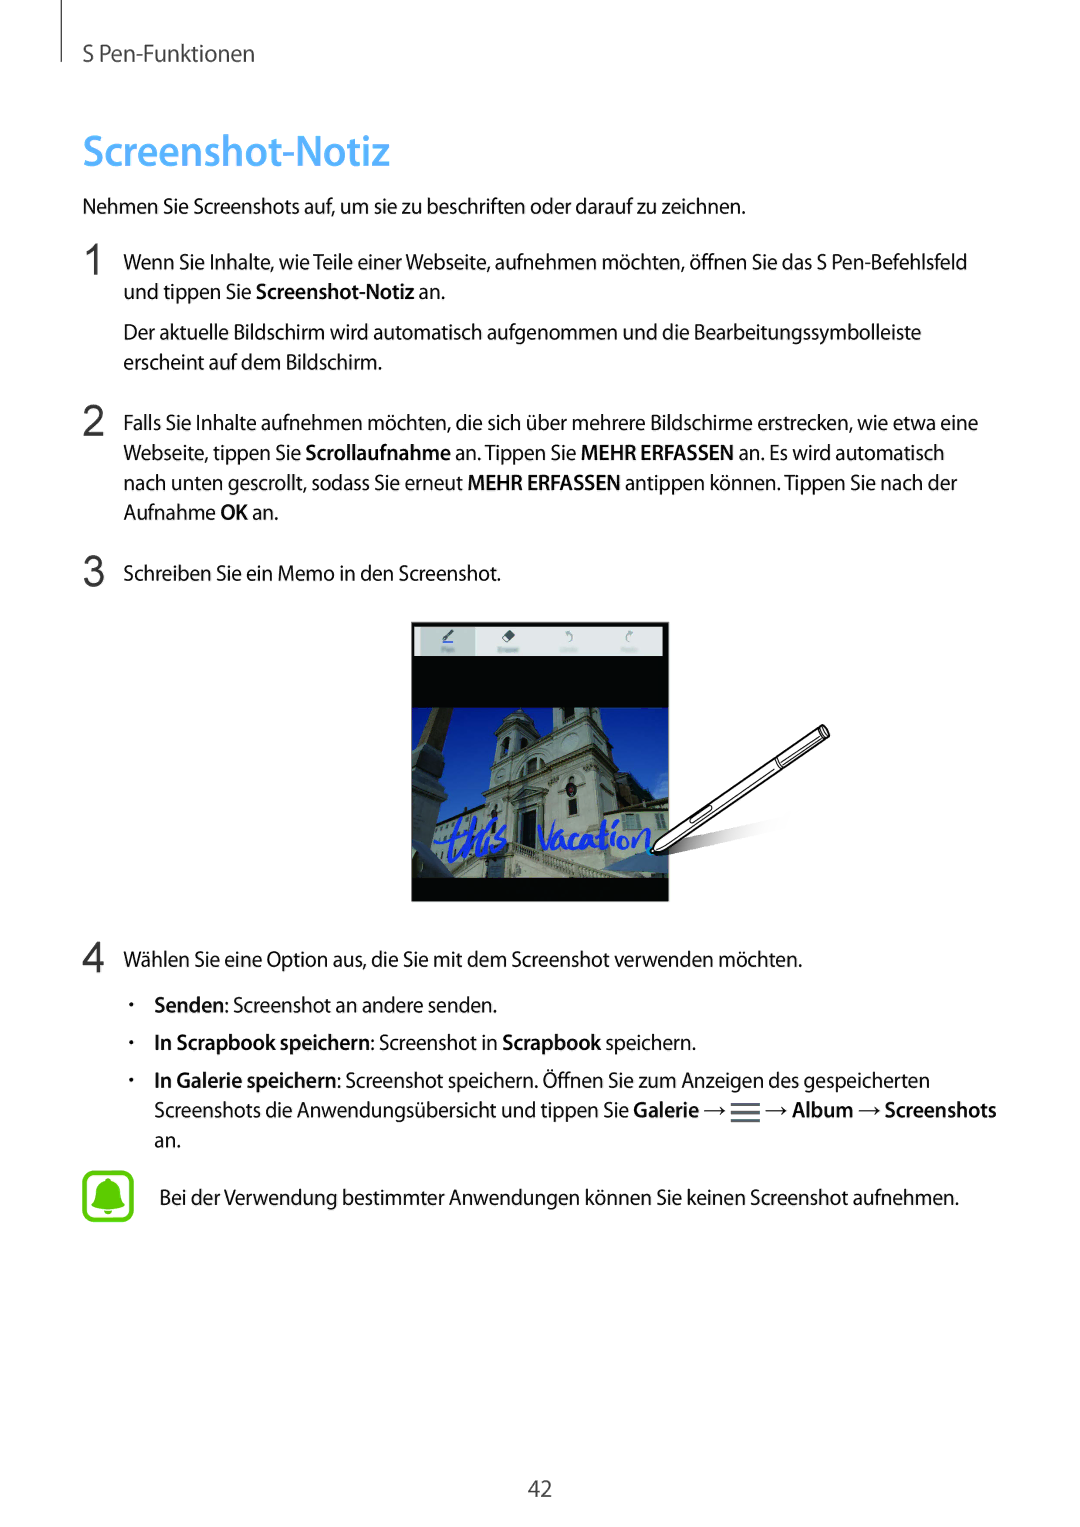 Samsung SM-N910FZDEATO, SM-N910FZWEEUR manual Screenshot-Notiz, Scrapbook speichern Screenshot in Scrapbook speichern 